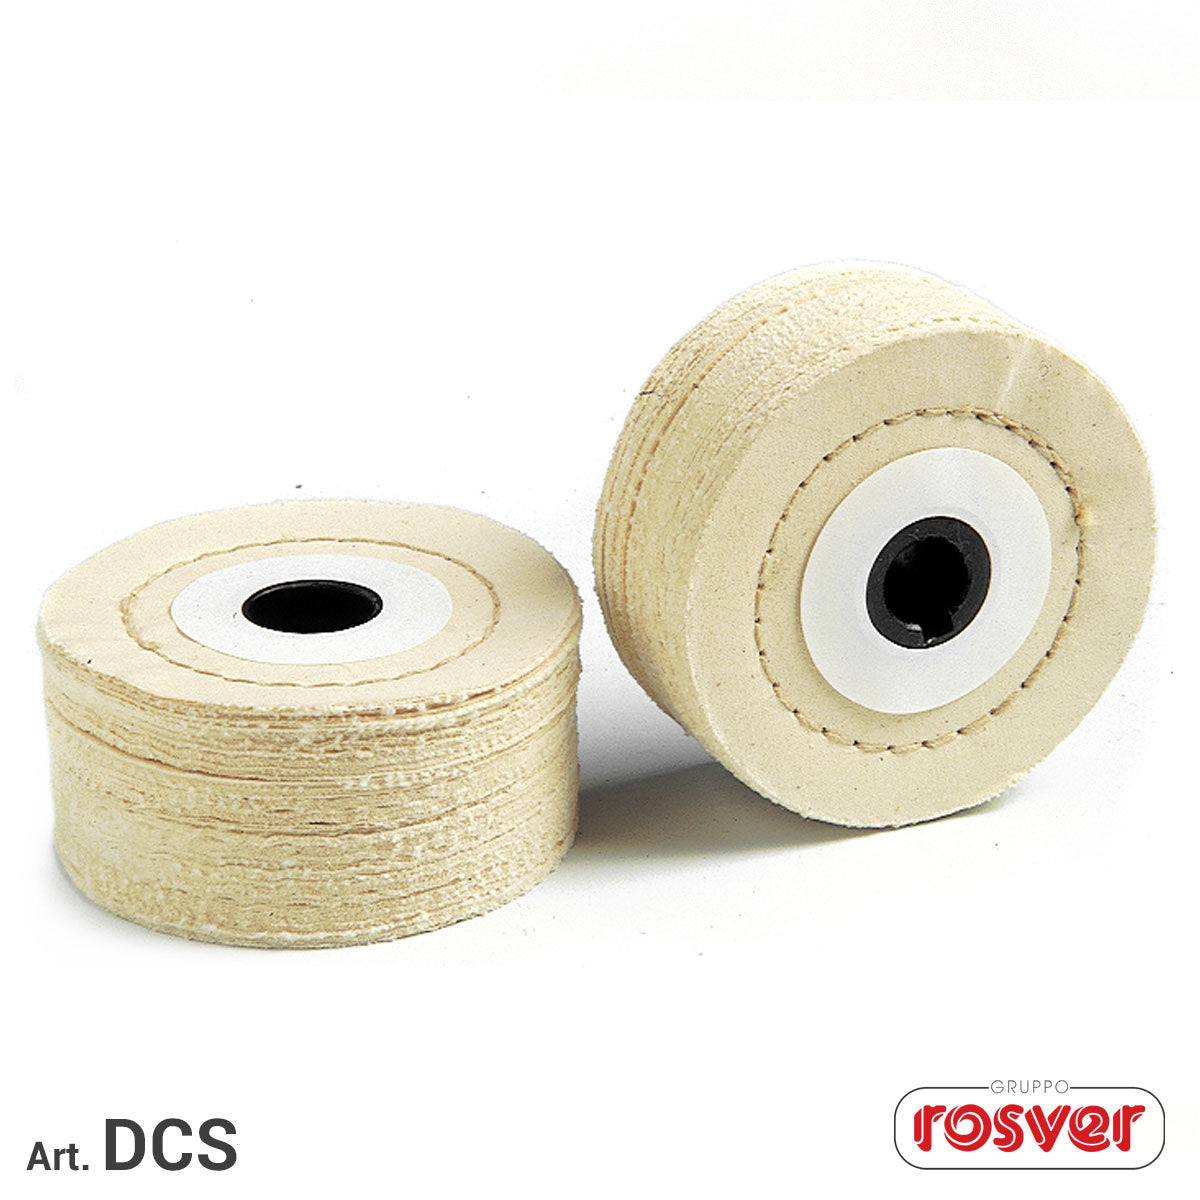 Disco Cotone speciale Rosver -.DCS D.110x50 f.19.1 T.580 - Conf.2pz